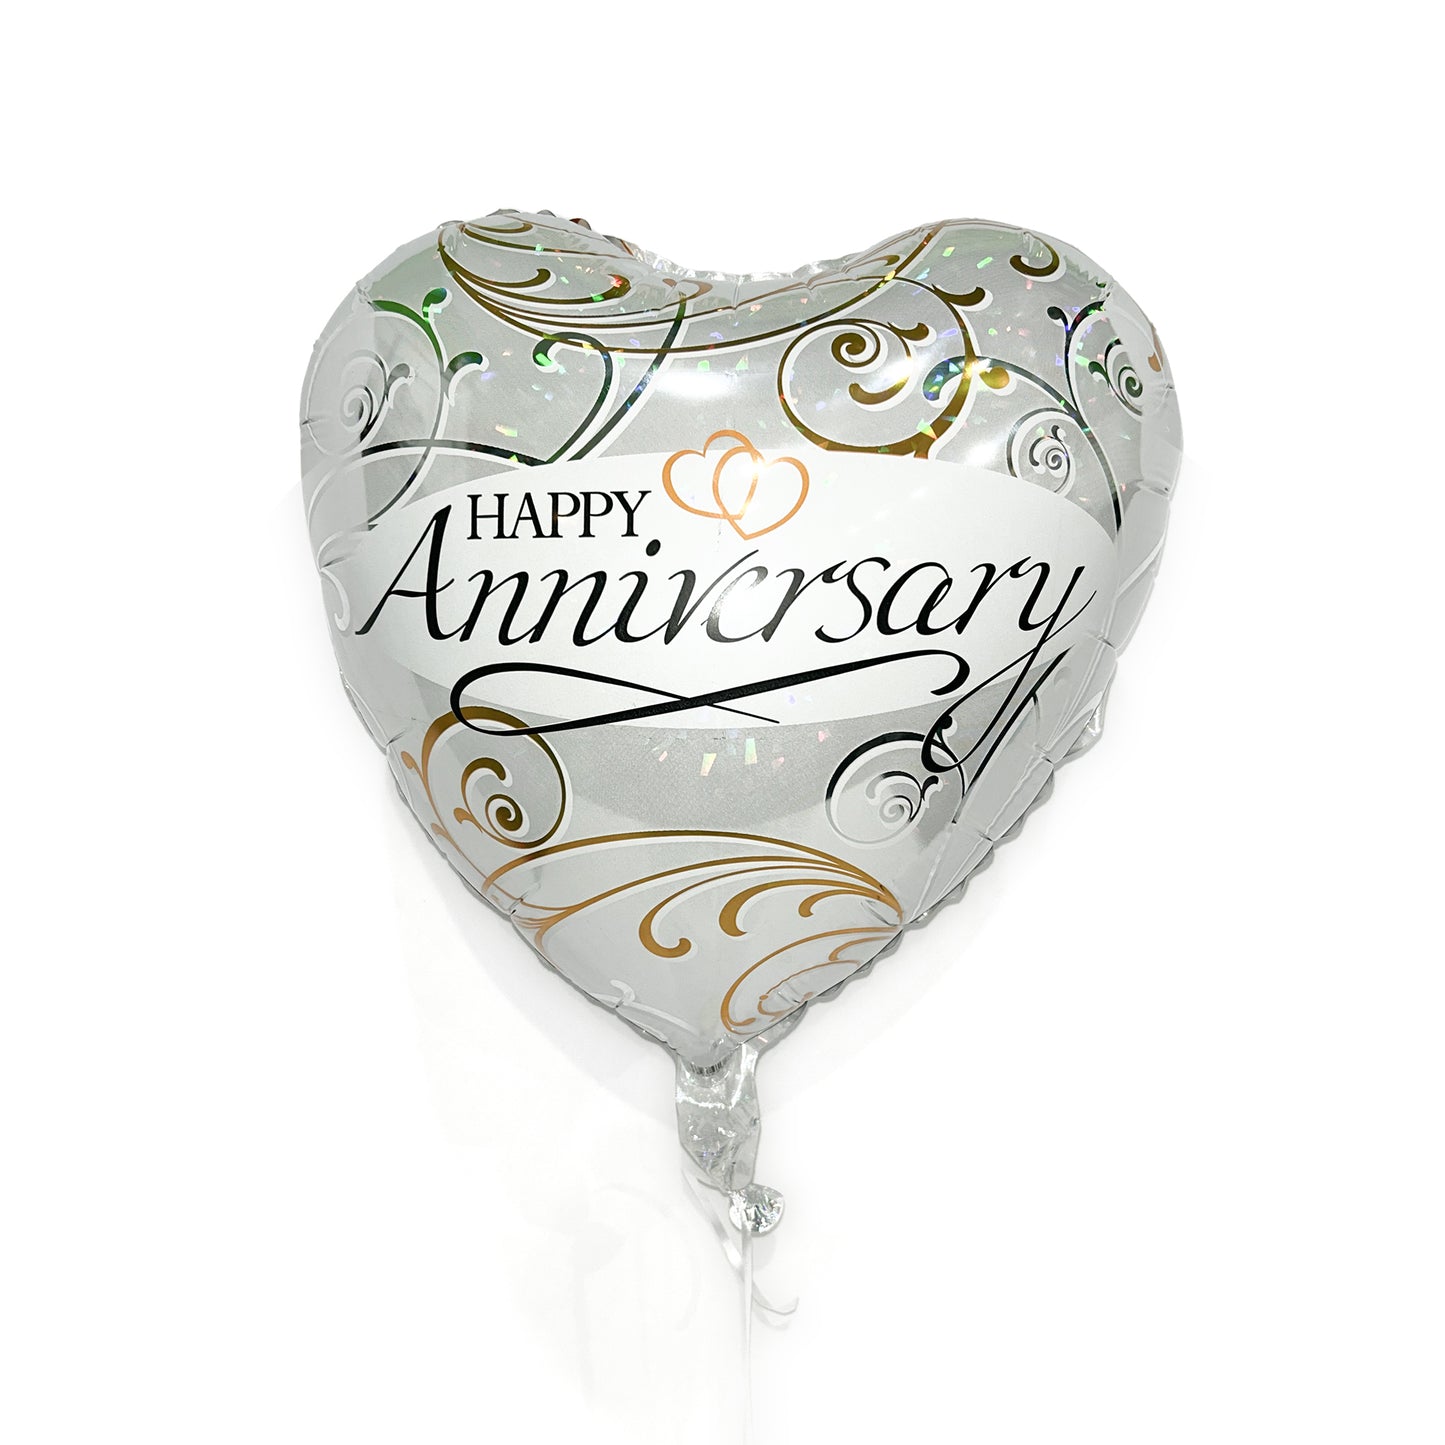 Happy anniversary white heart mylar balloon